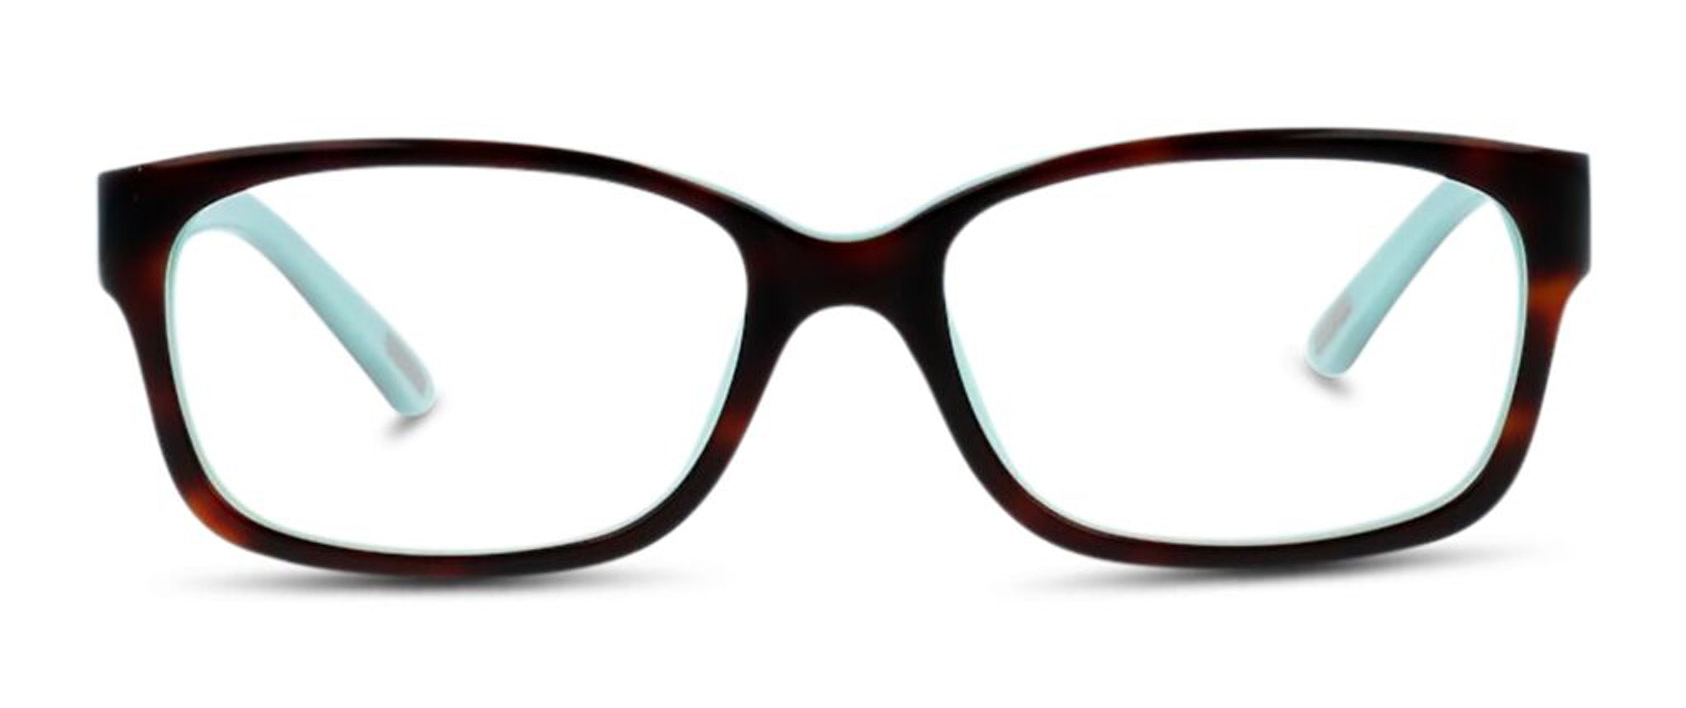 vision express ralph lauren glasses